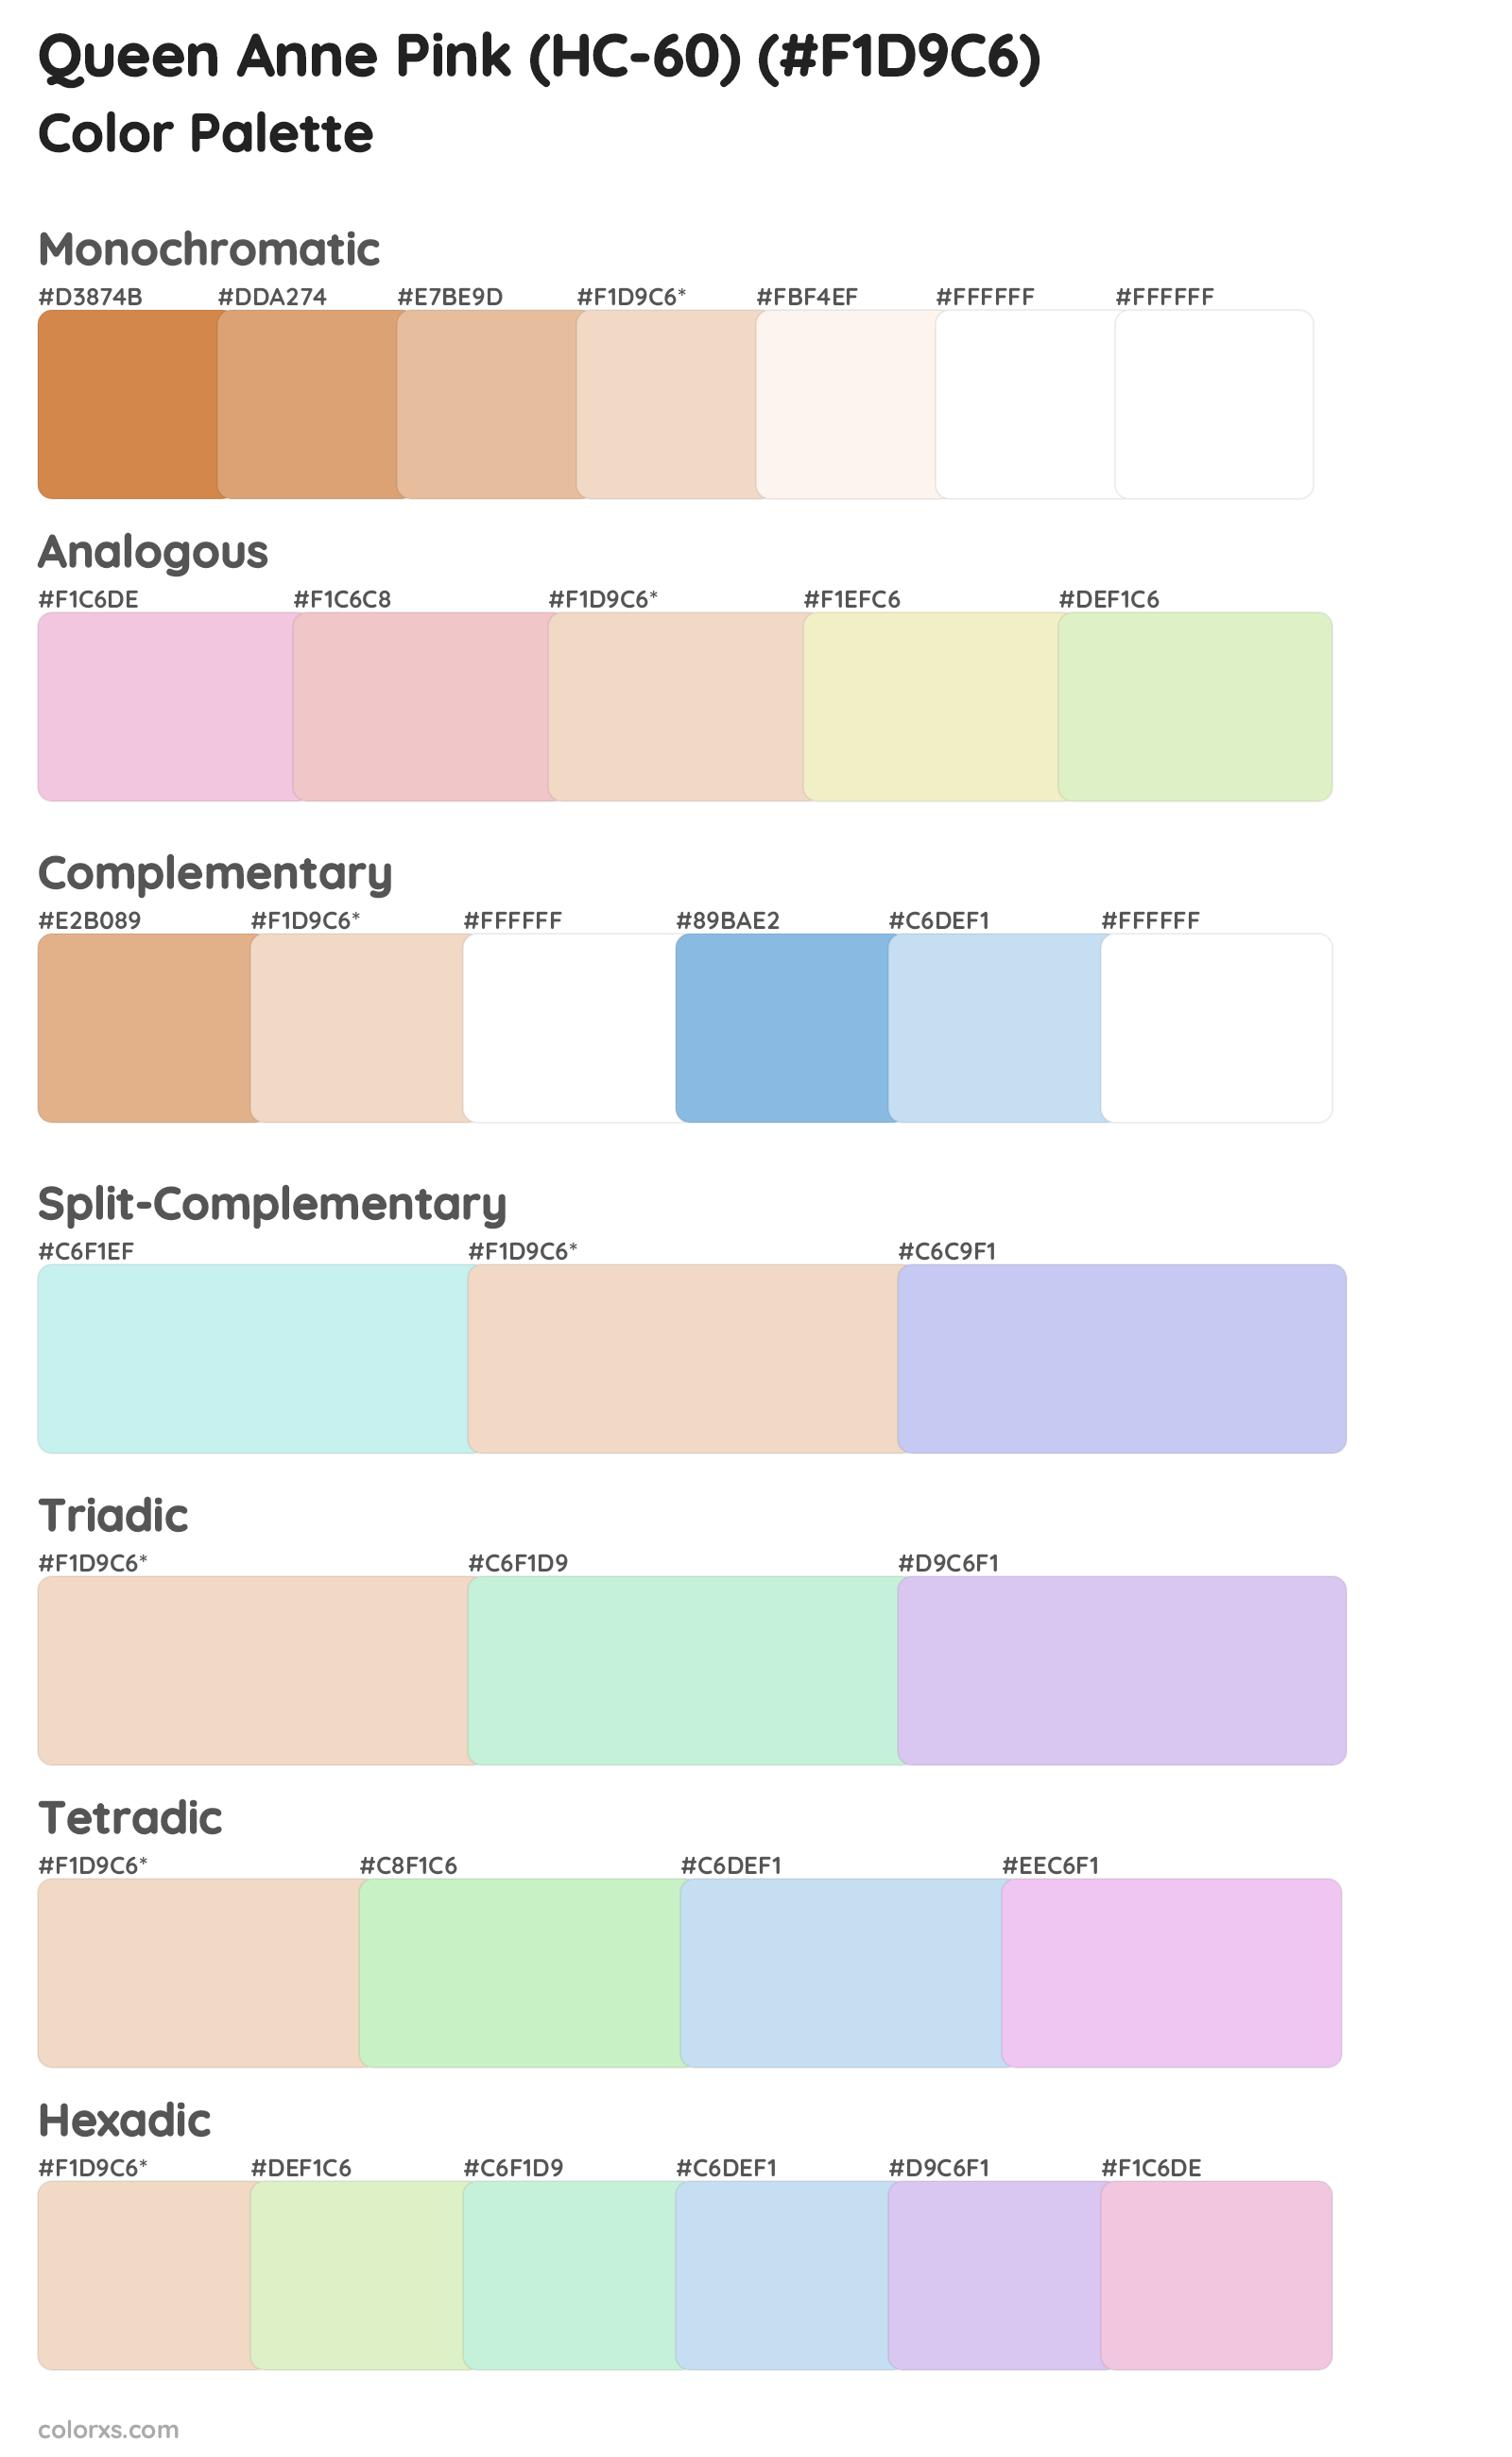 Queen Anne Pink (HC-60) Color Scheme Palettes